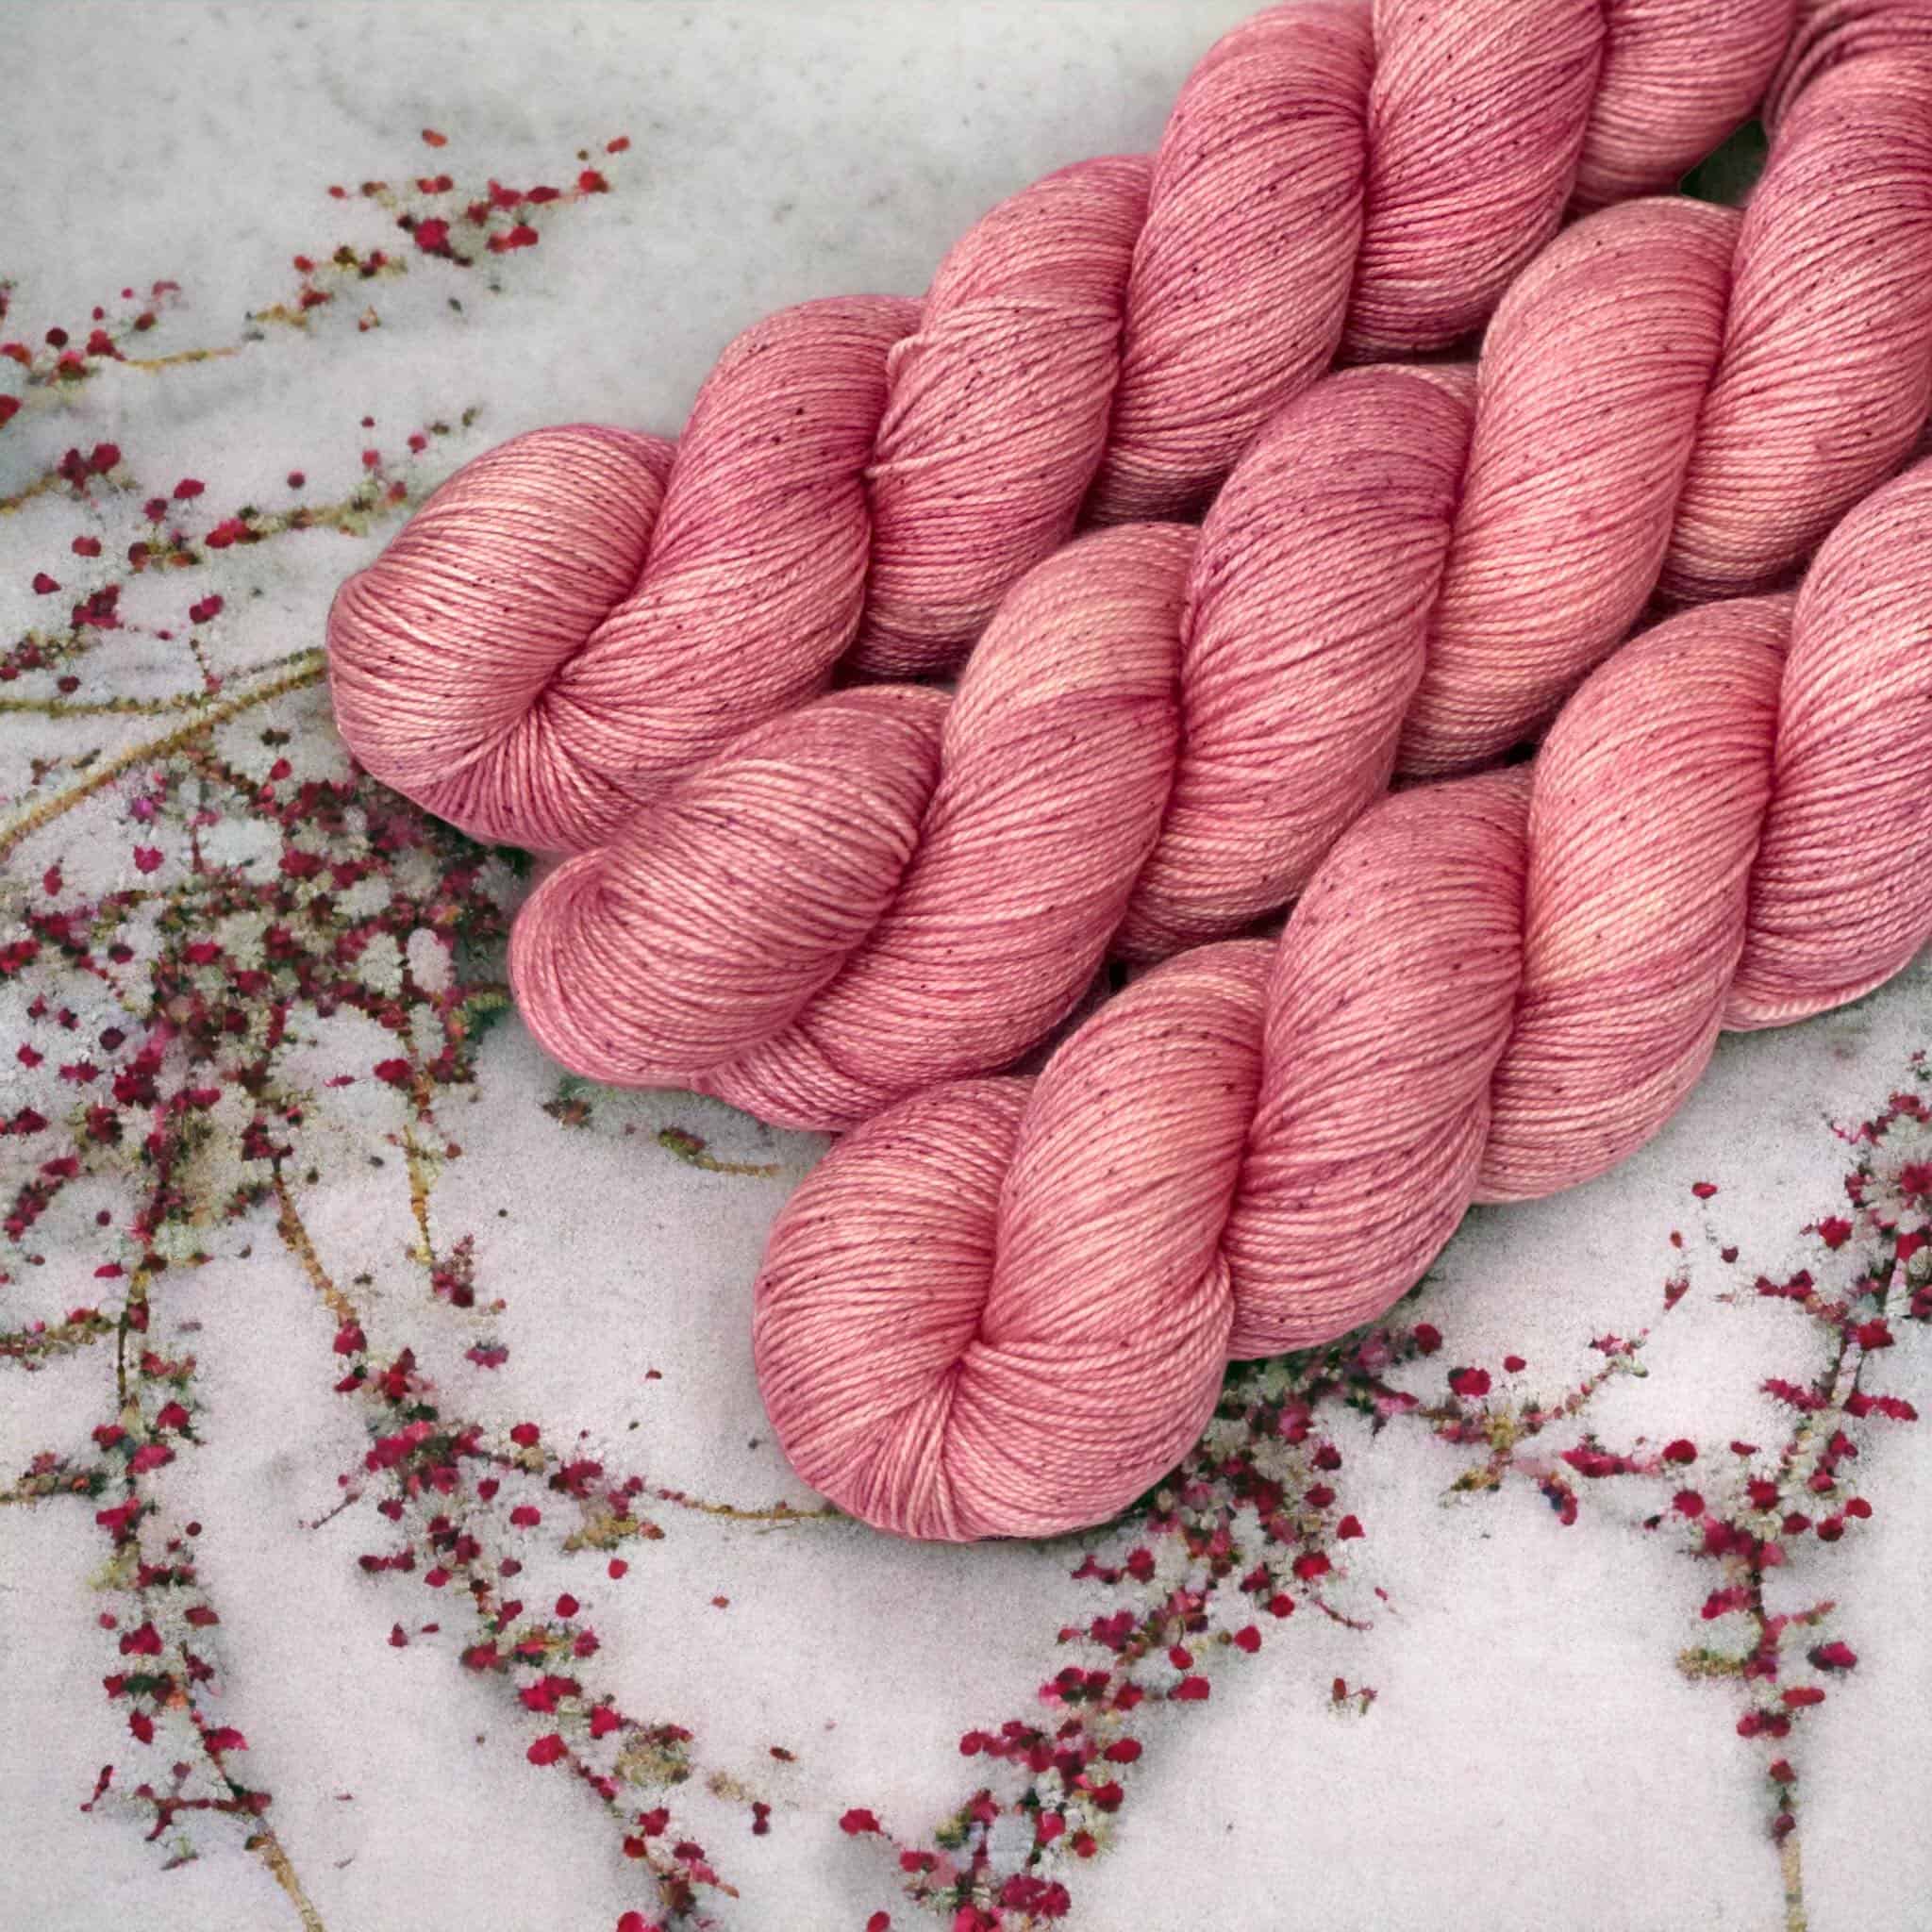 Three skeins of light pink yarn.